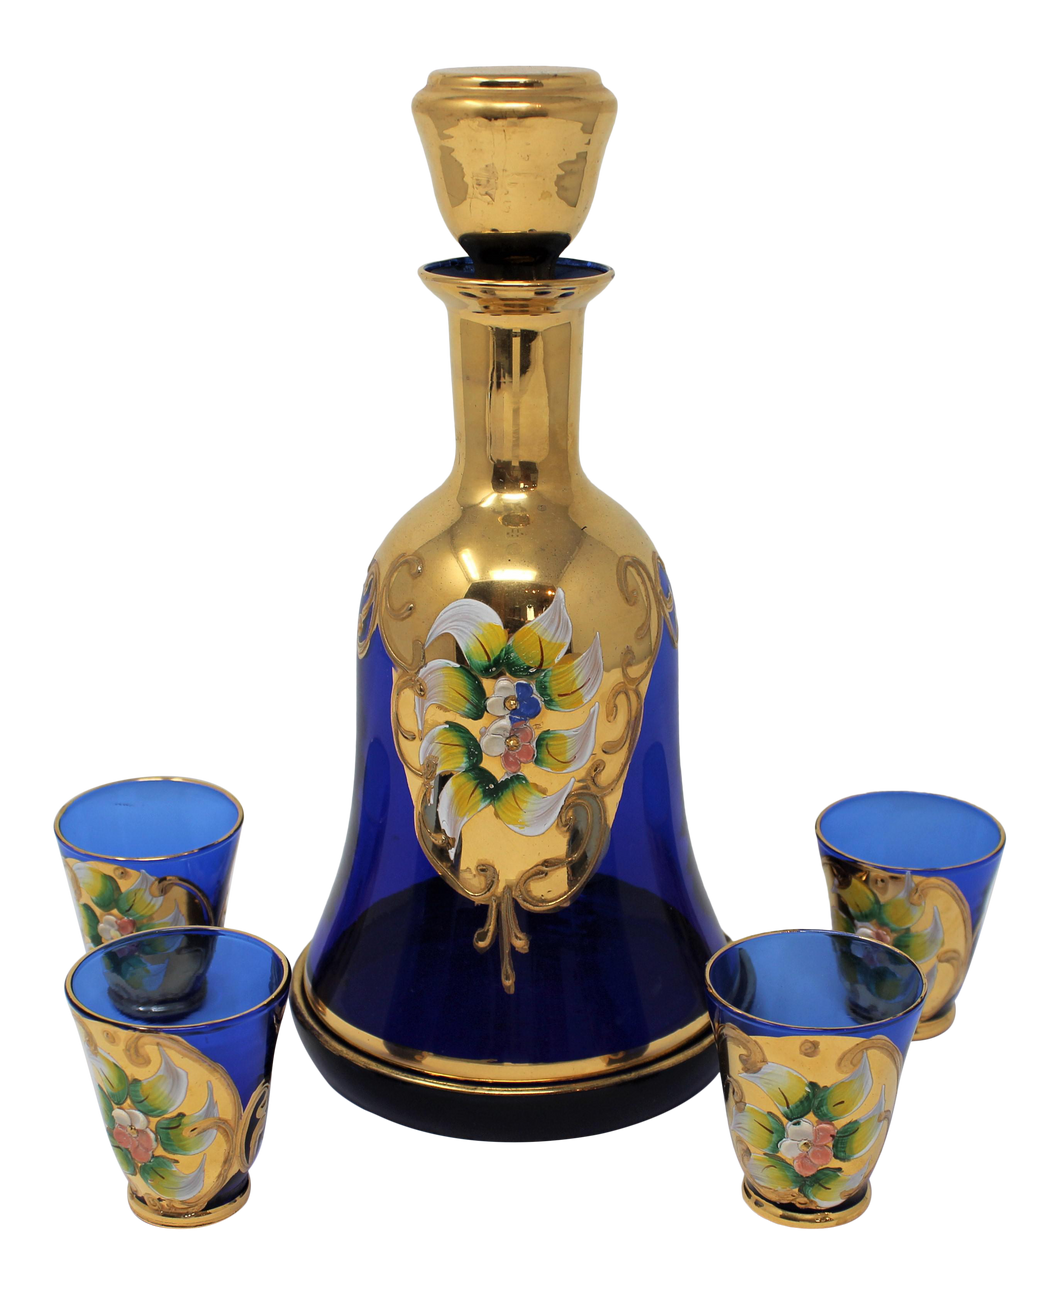 Vintage Venetian Glassware Set - 6 Piece Set